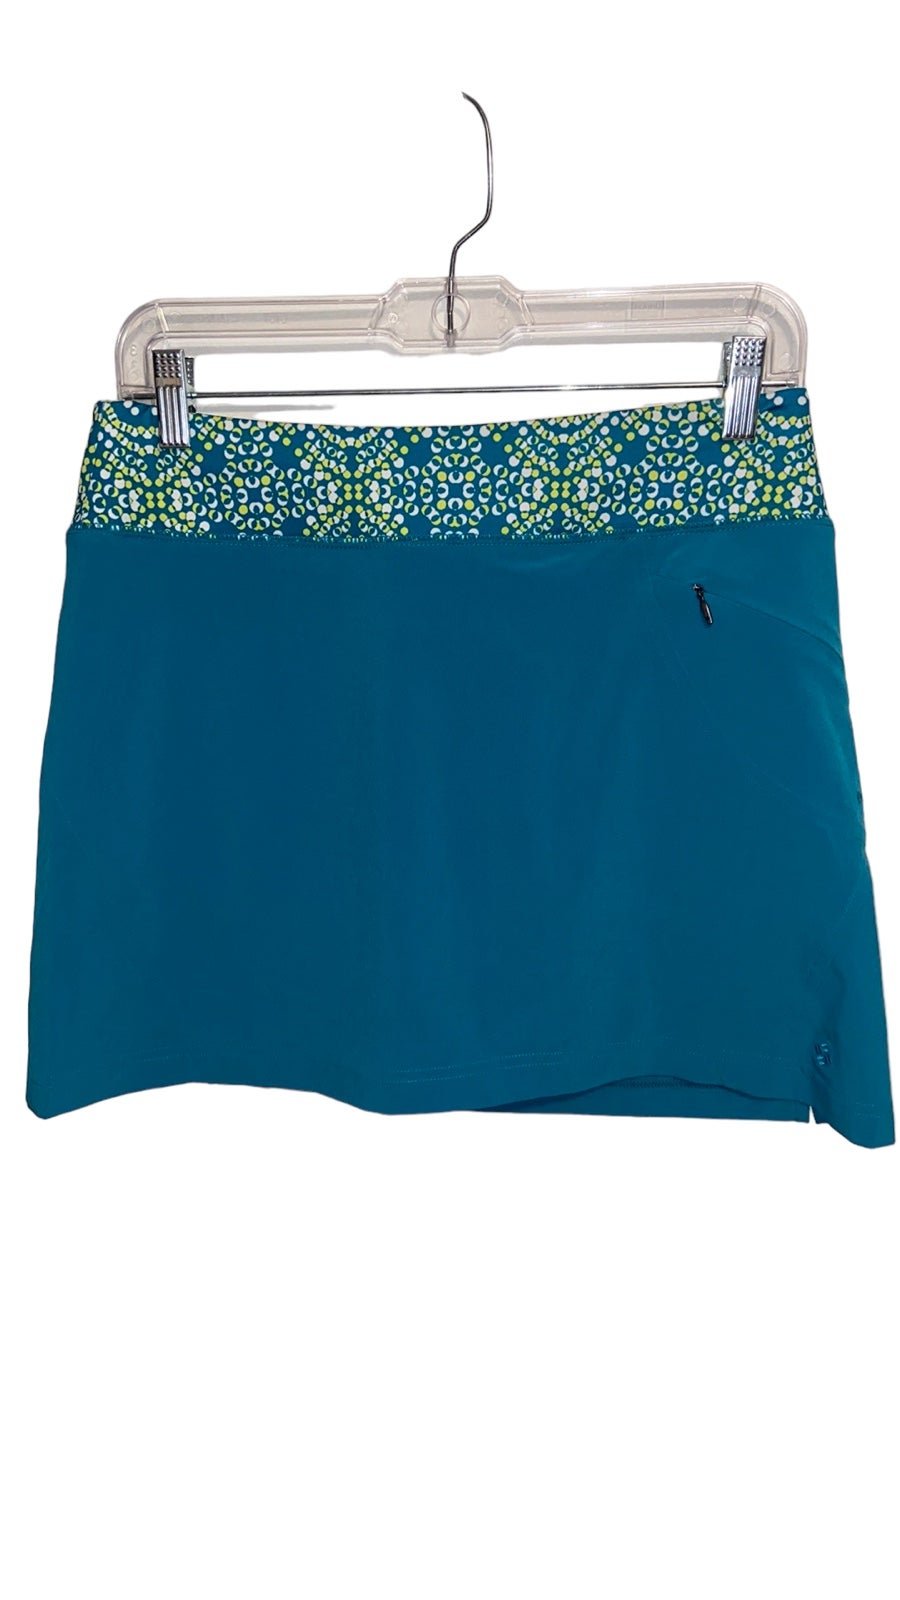 Custom Columbia Womens Size Small Teal Skort Shorts Skirt Golf Tennis Athletic Pocket LkrbOvorj Buying Cheap